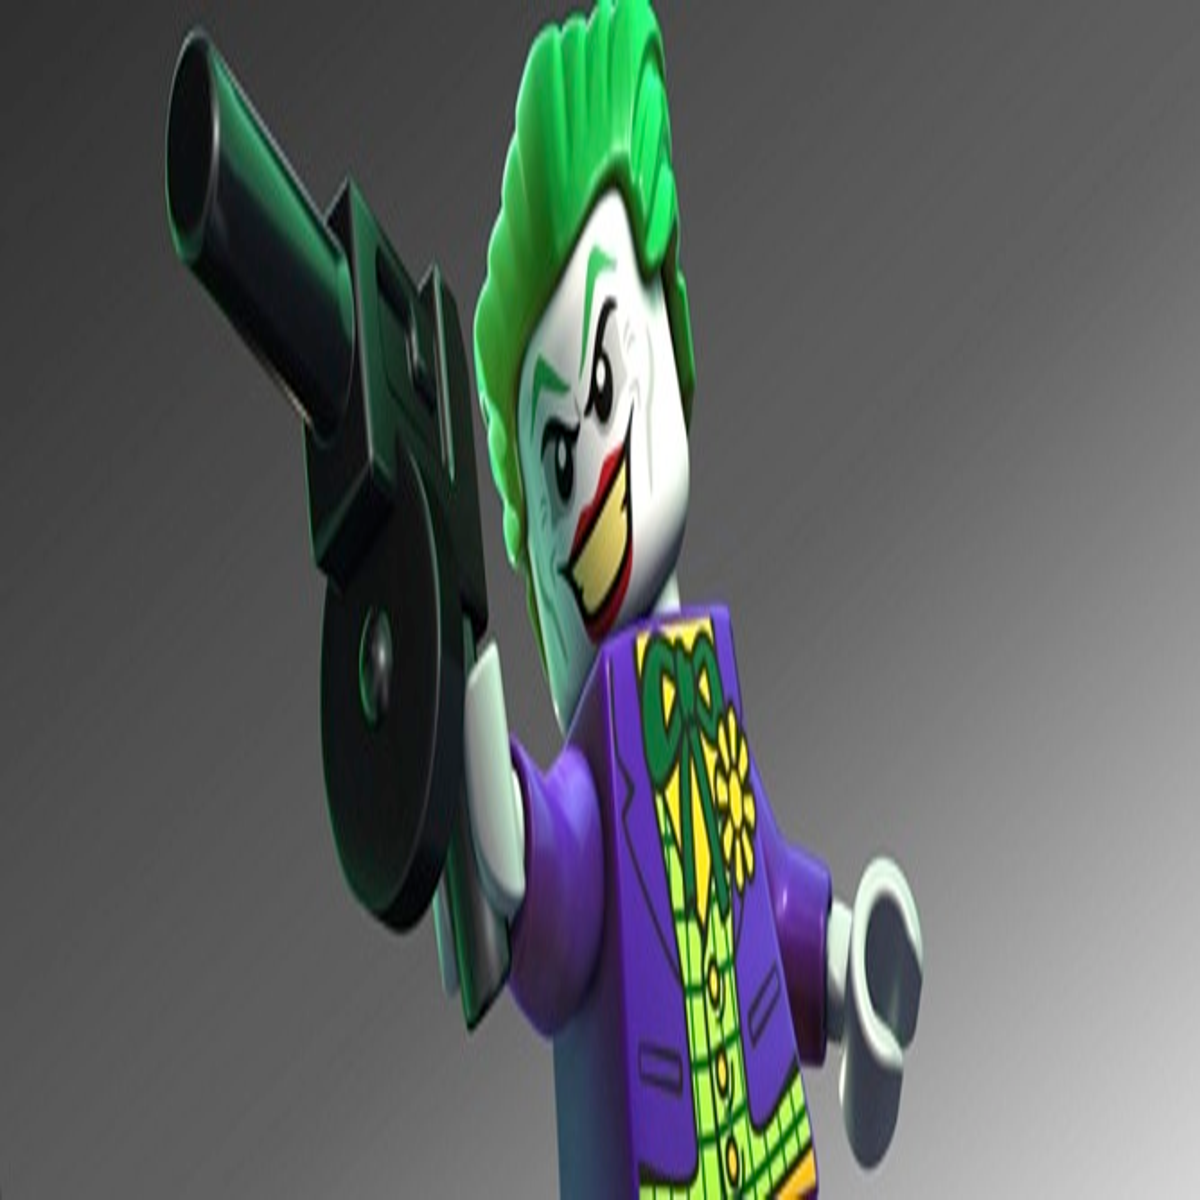 the joker lego batman 2